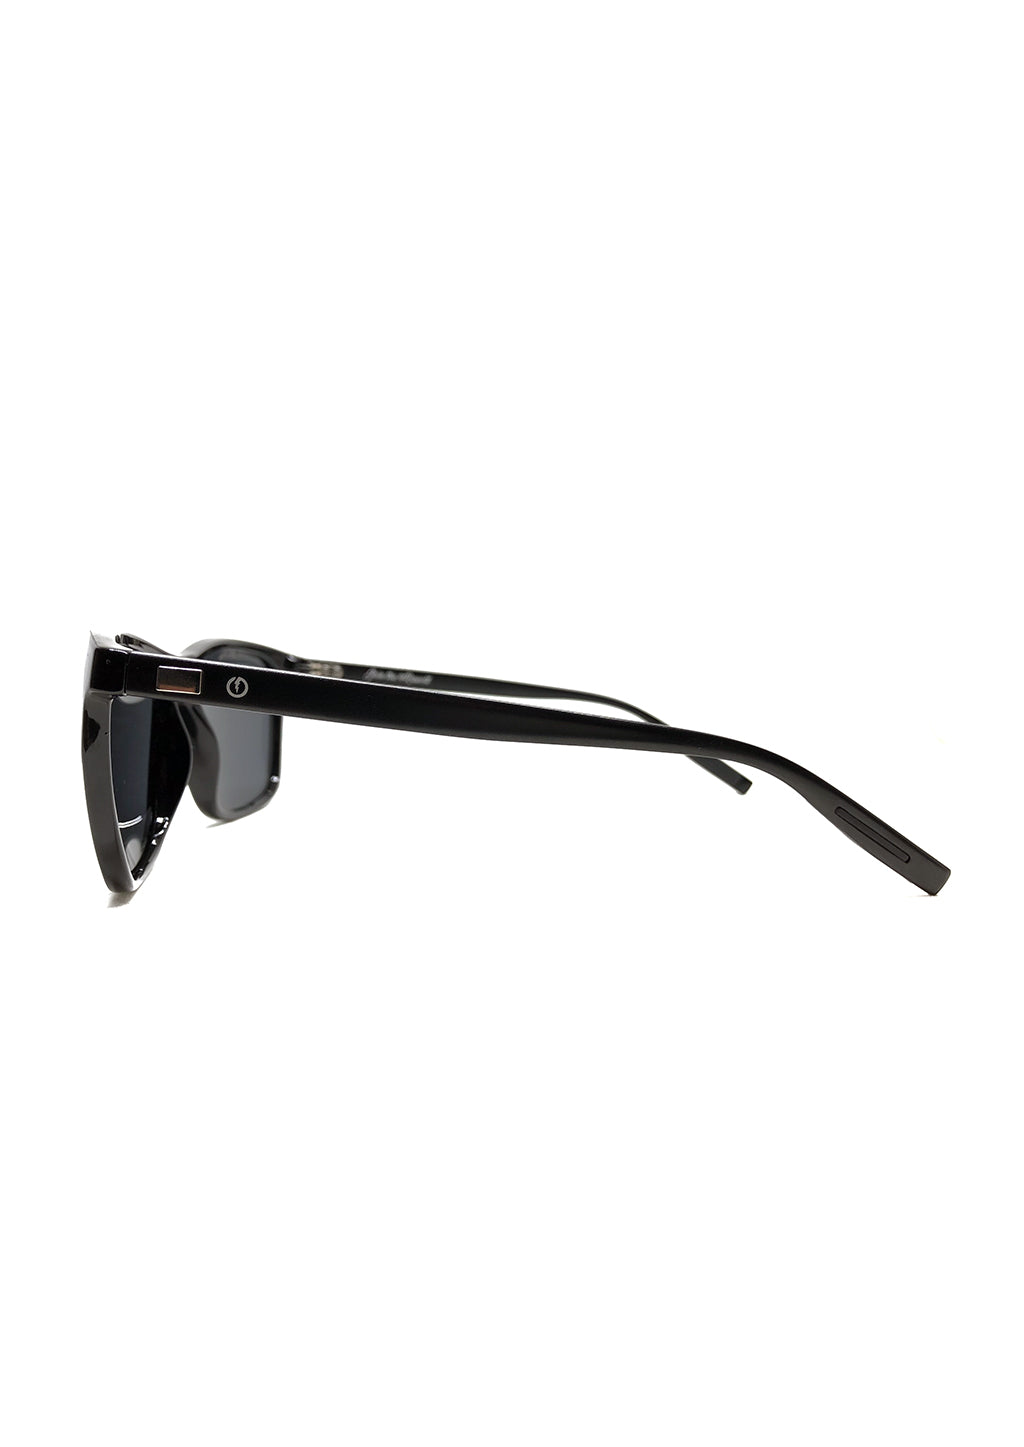 Yanaka Wayfarer sunglasses - Details